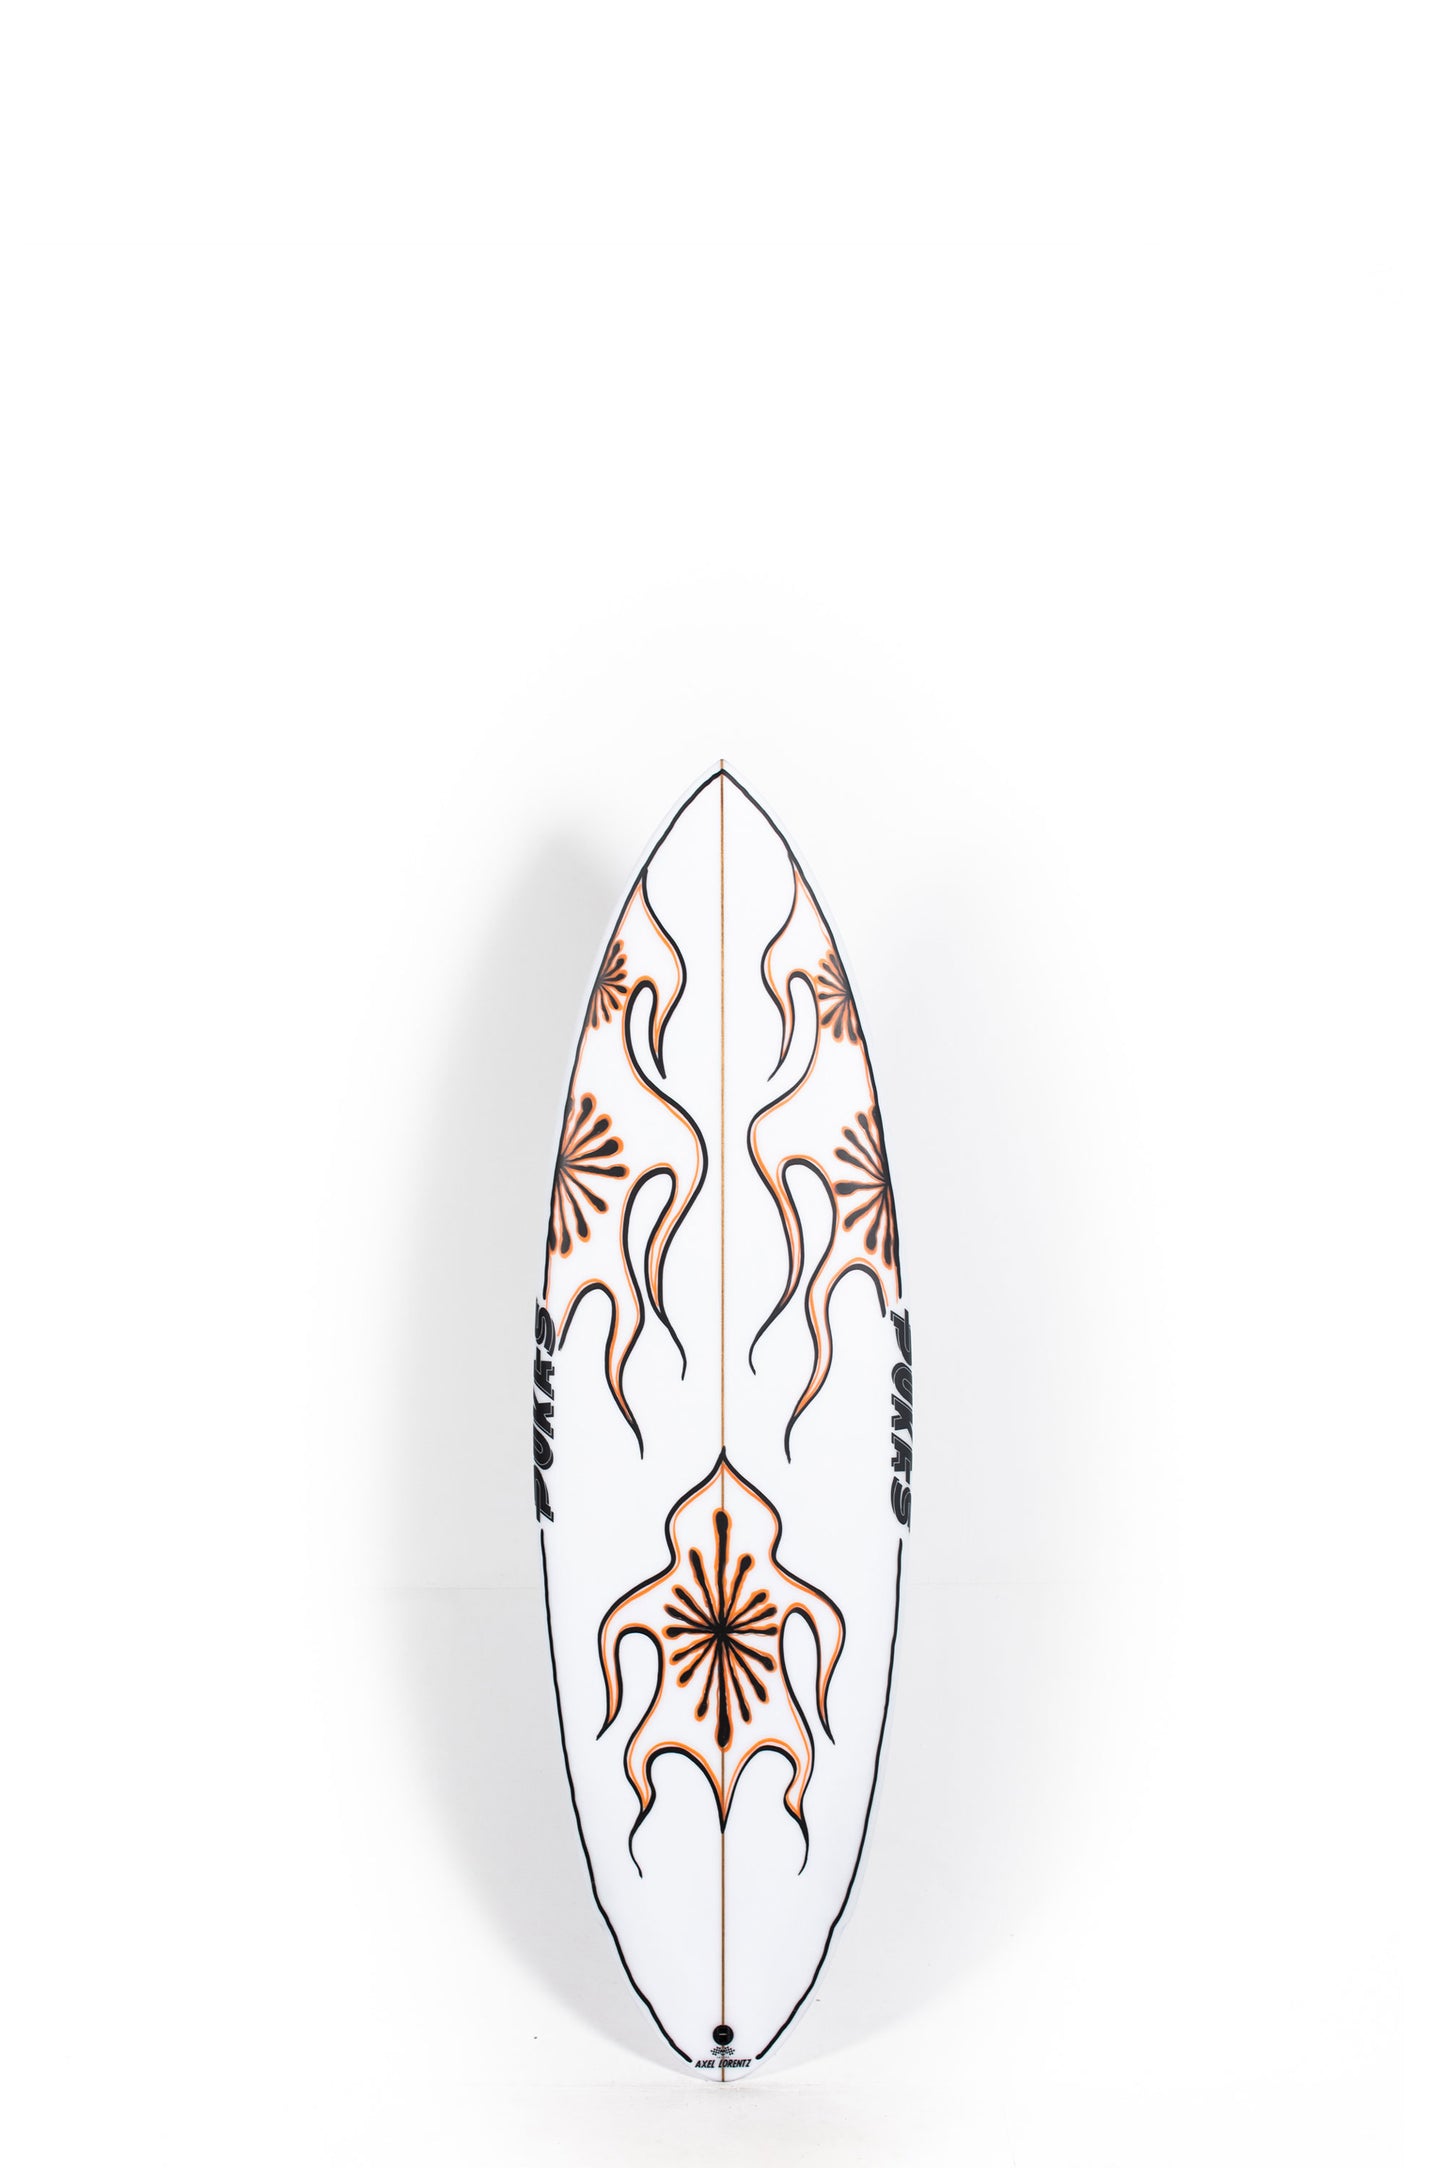 Pukas Surf Shop - Pukas Surfboards - ACID PLAN by Axel Lorentz -  5'8" x 19,75 x 2,40 x 29,42L - AX08256